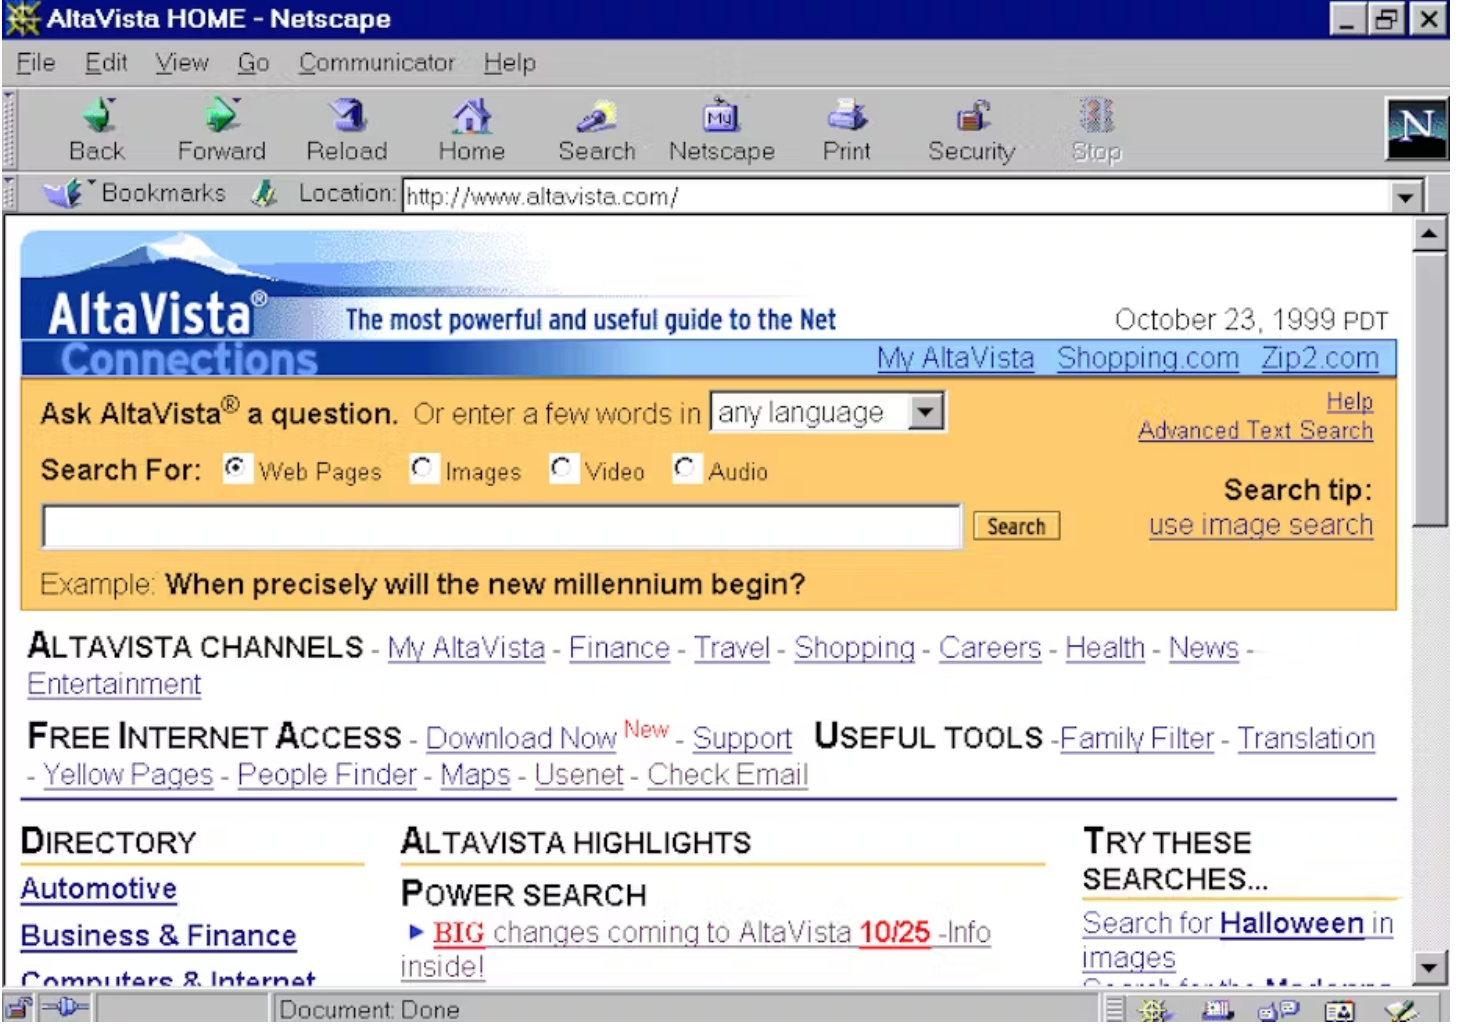 Altavista was the original keyword research tool